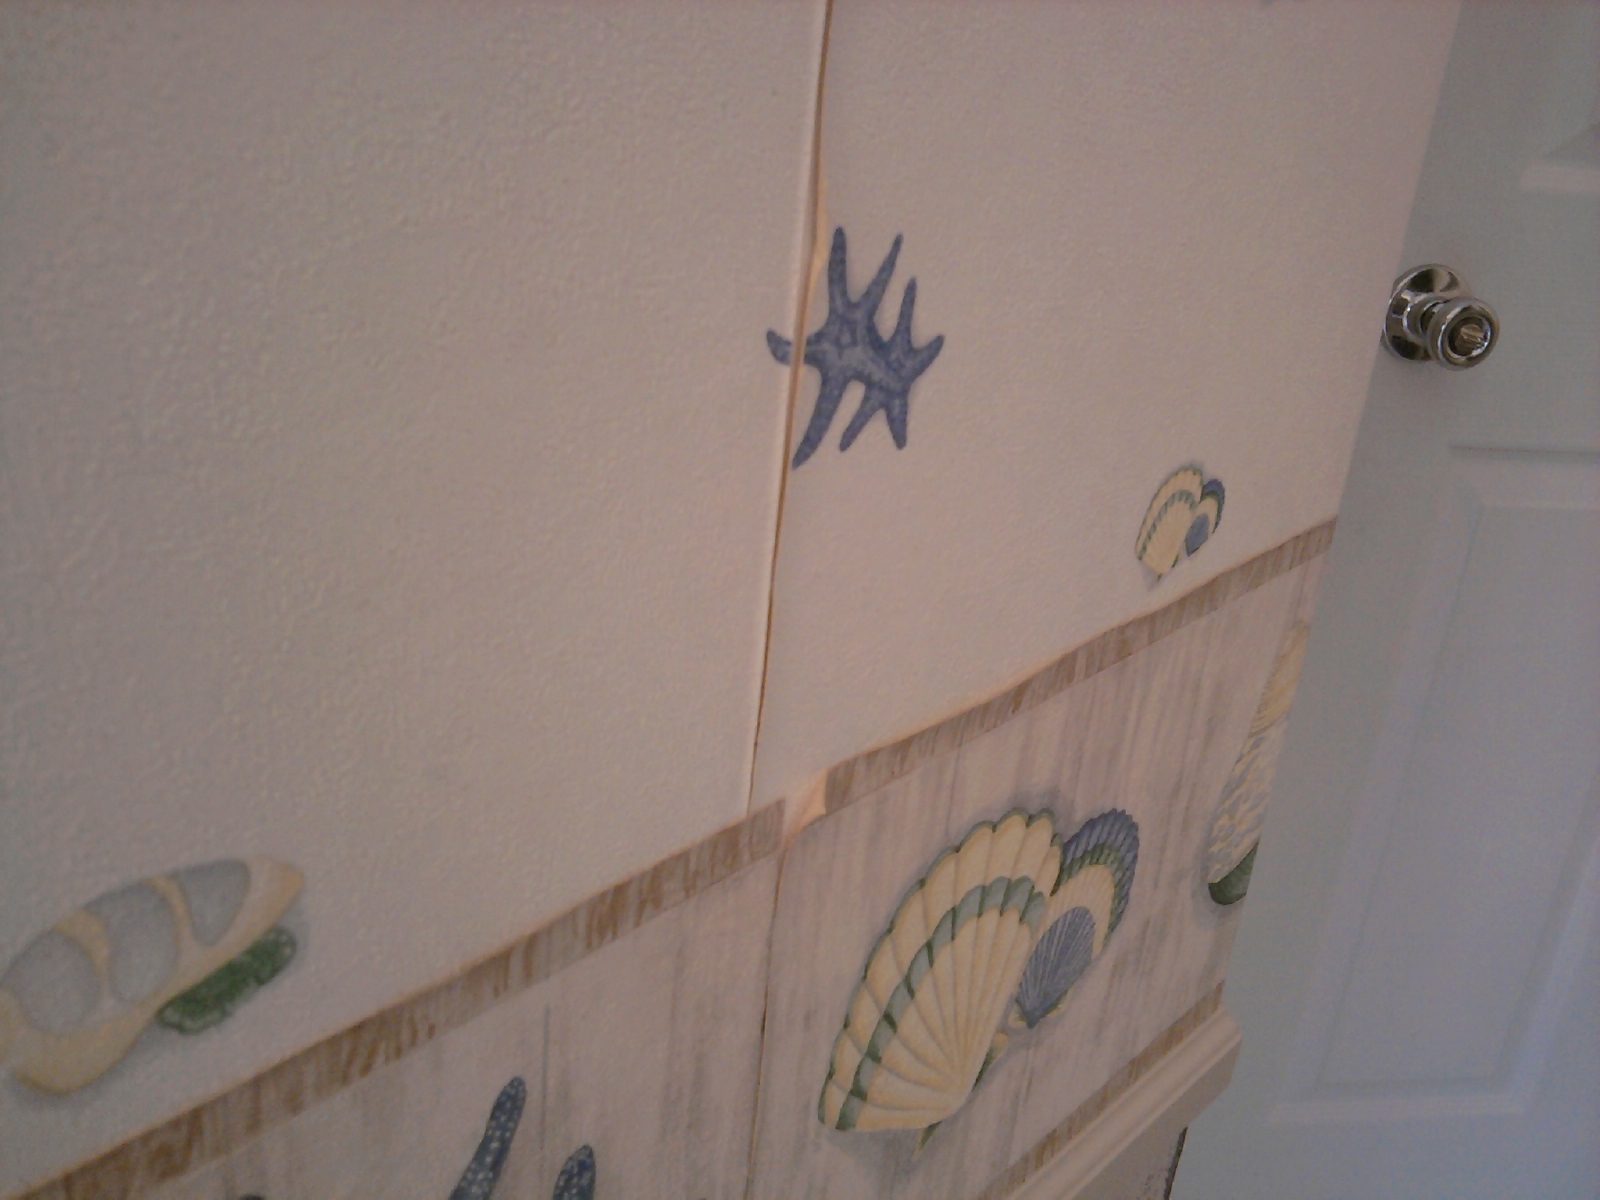 Wallpaper Peeling off Bathroom Walls